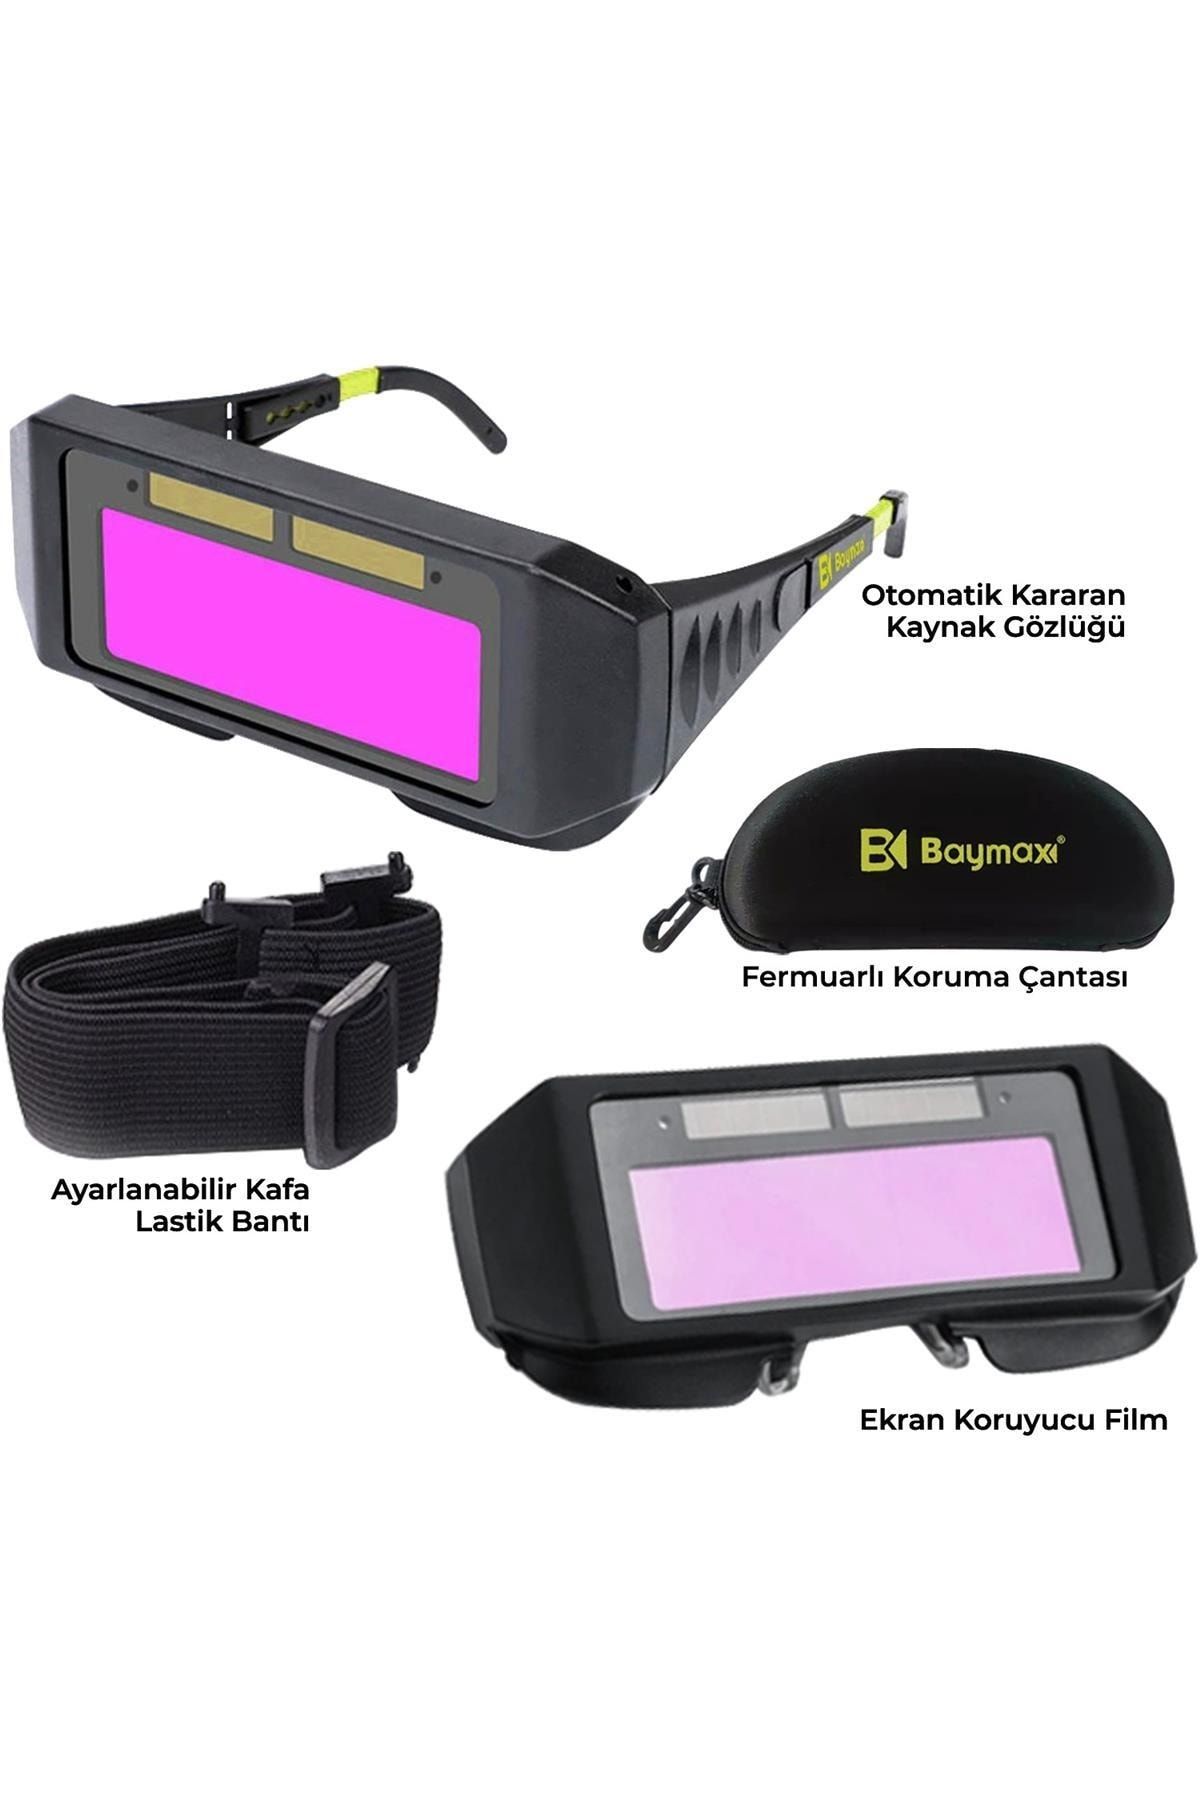 Baymax Max-weld Bx-3200 Otomatik Kararan Colormatik Kaynak Gözlüğü